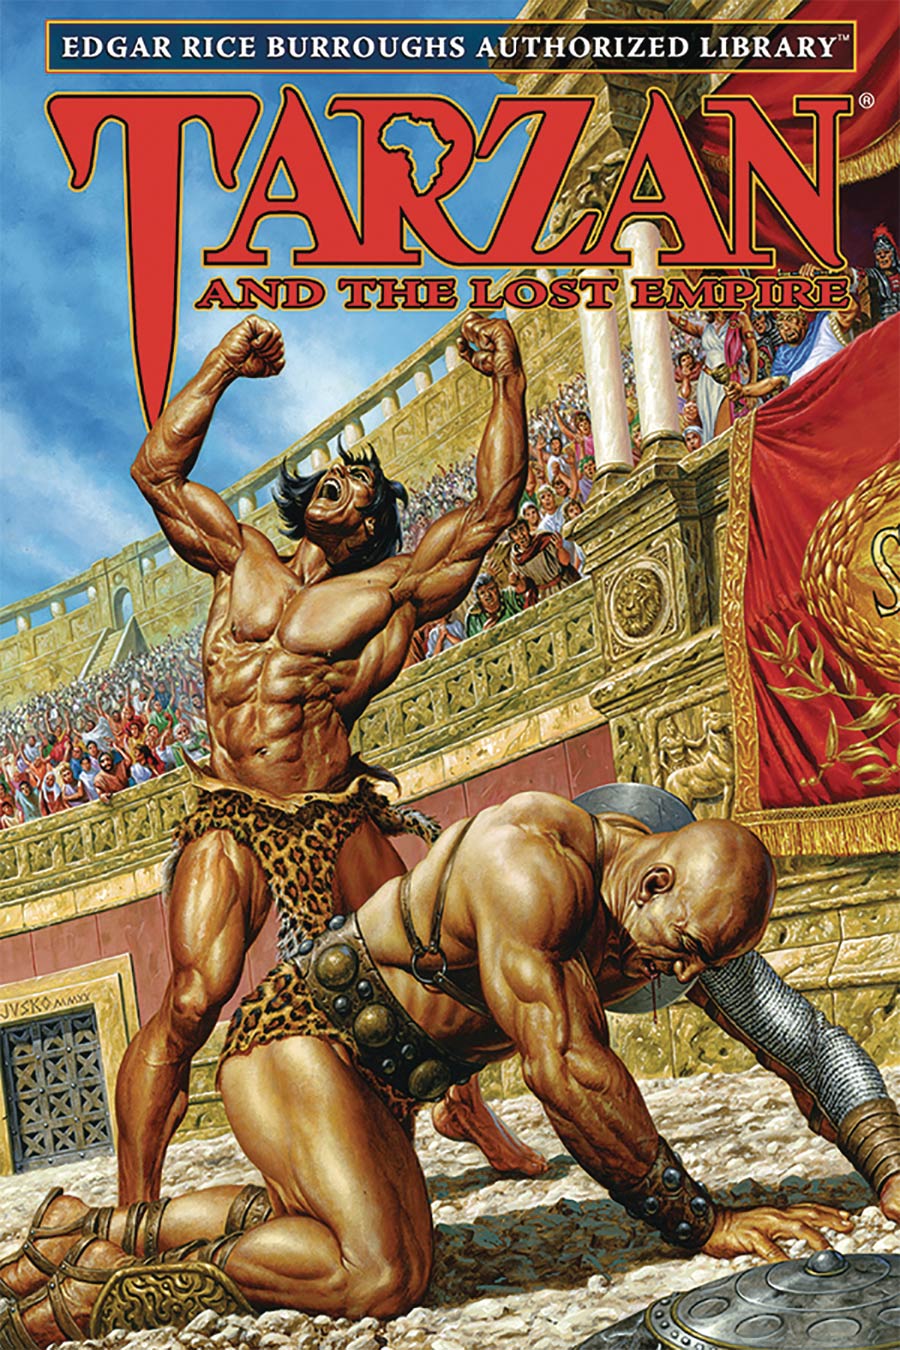 Edgar Rice Burroughs Authorized Library Tarzan Vol 12 Tarzan And The Lost Empire HC